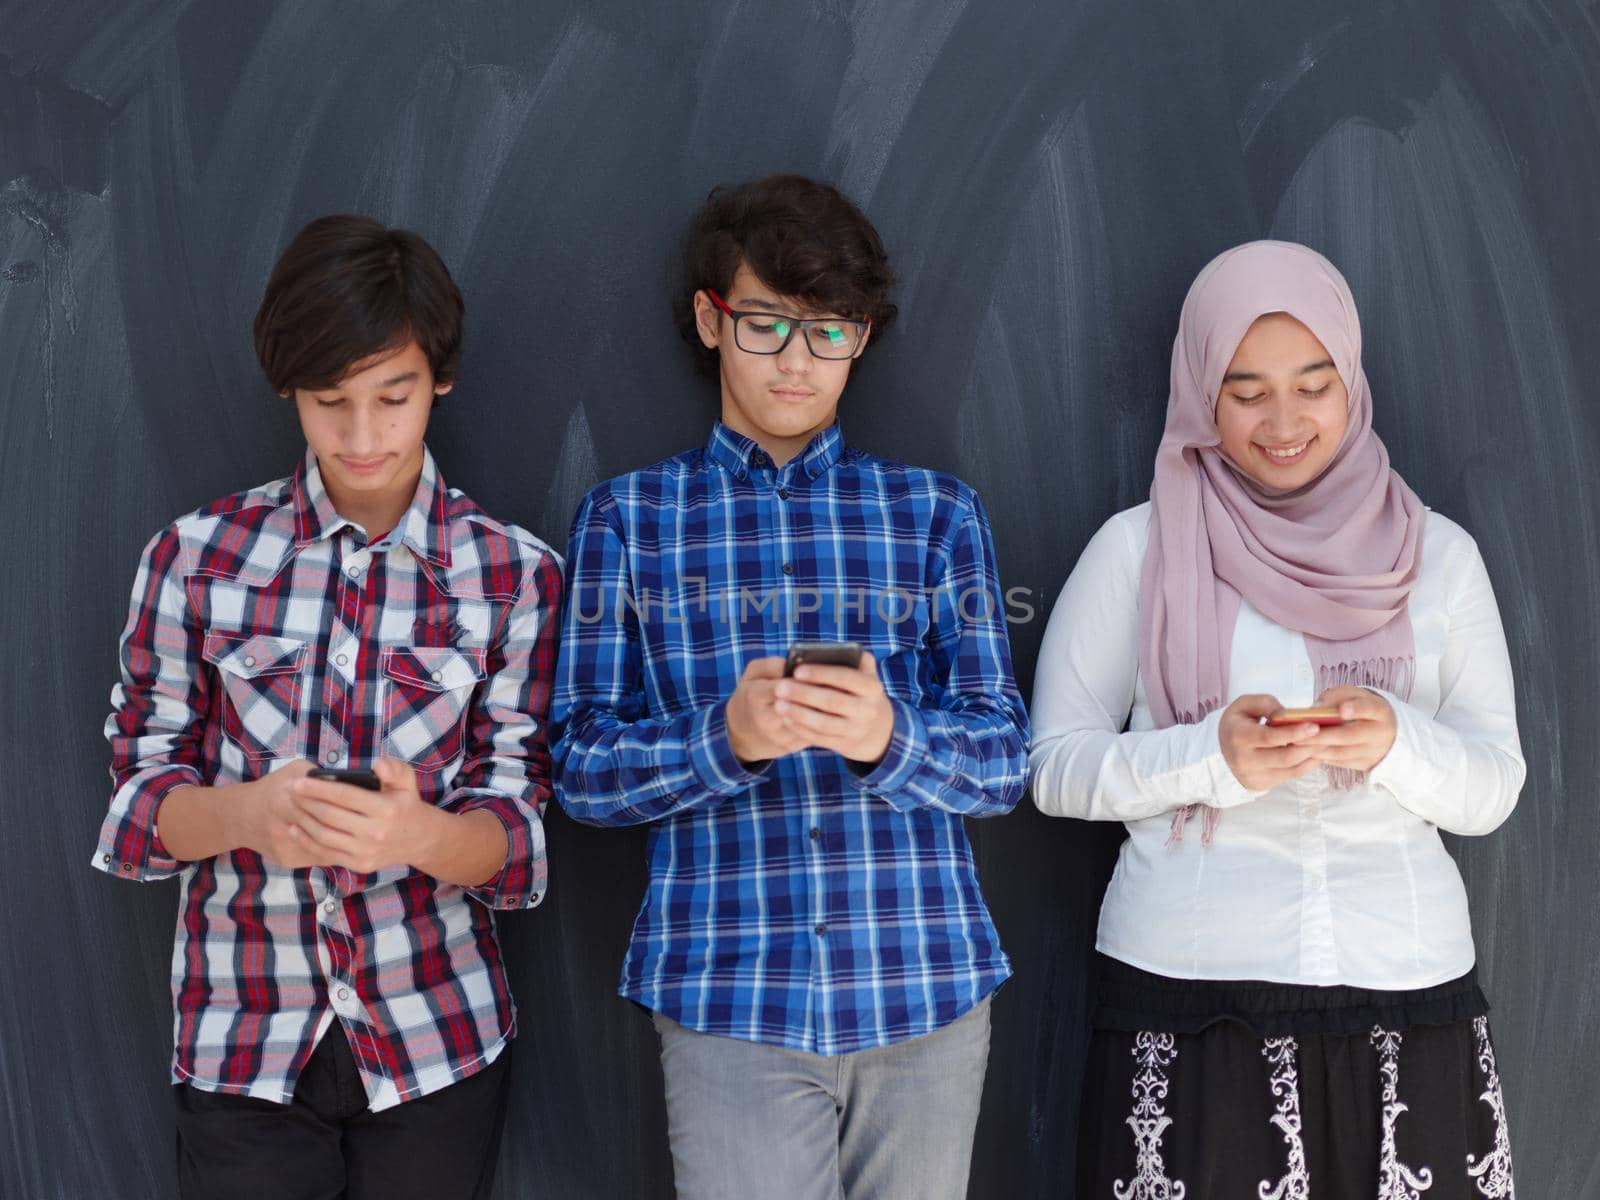 arab teenagers group using smart phones for social media networking by dotshock